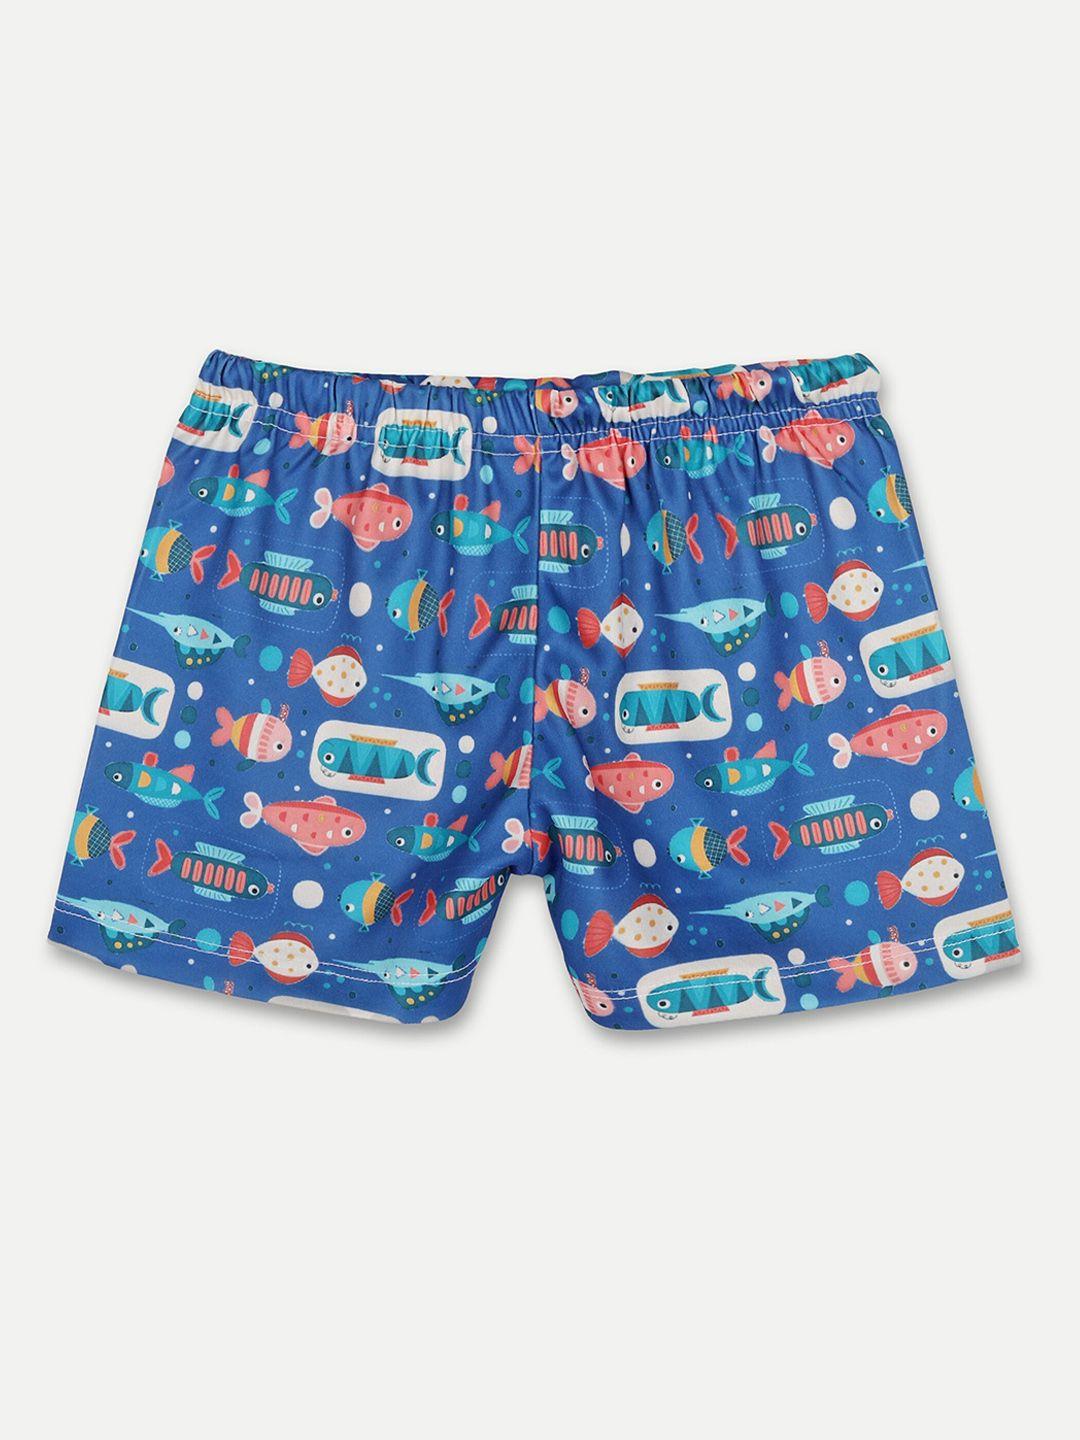 baesd unisex kids conversational printed shorts